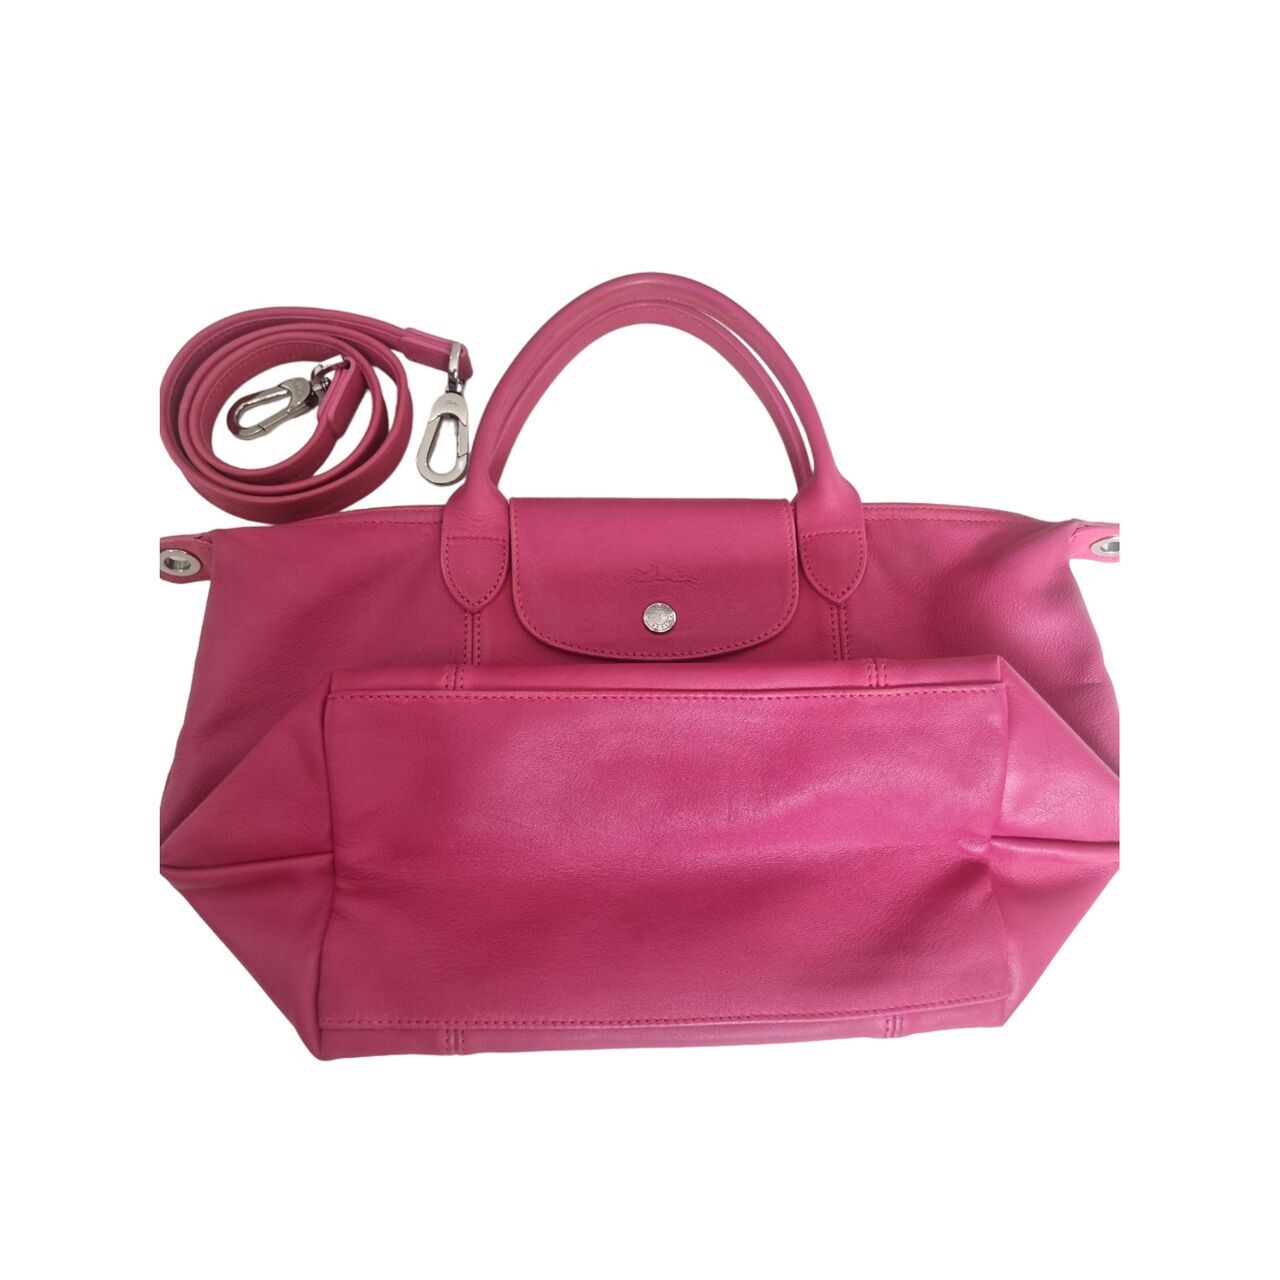 Longchamp Le Pliage Cuir Leather Small Pink Rose Handbag